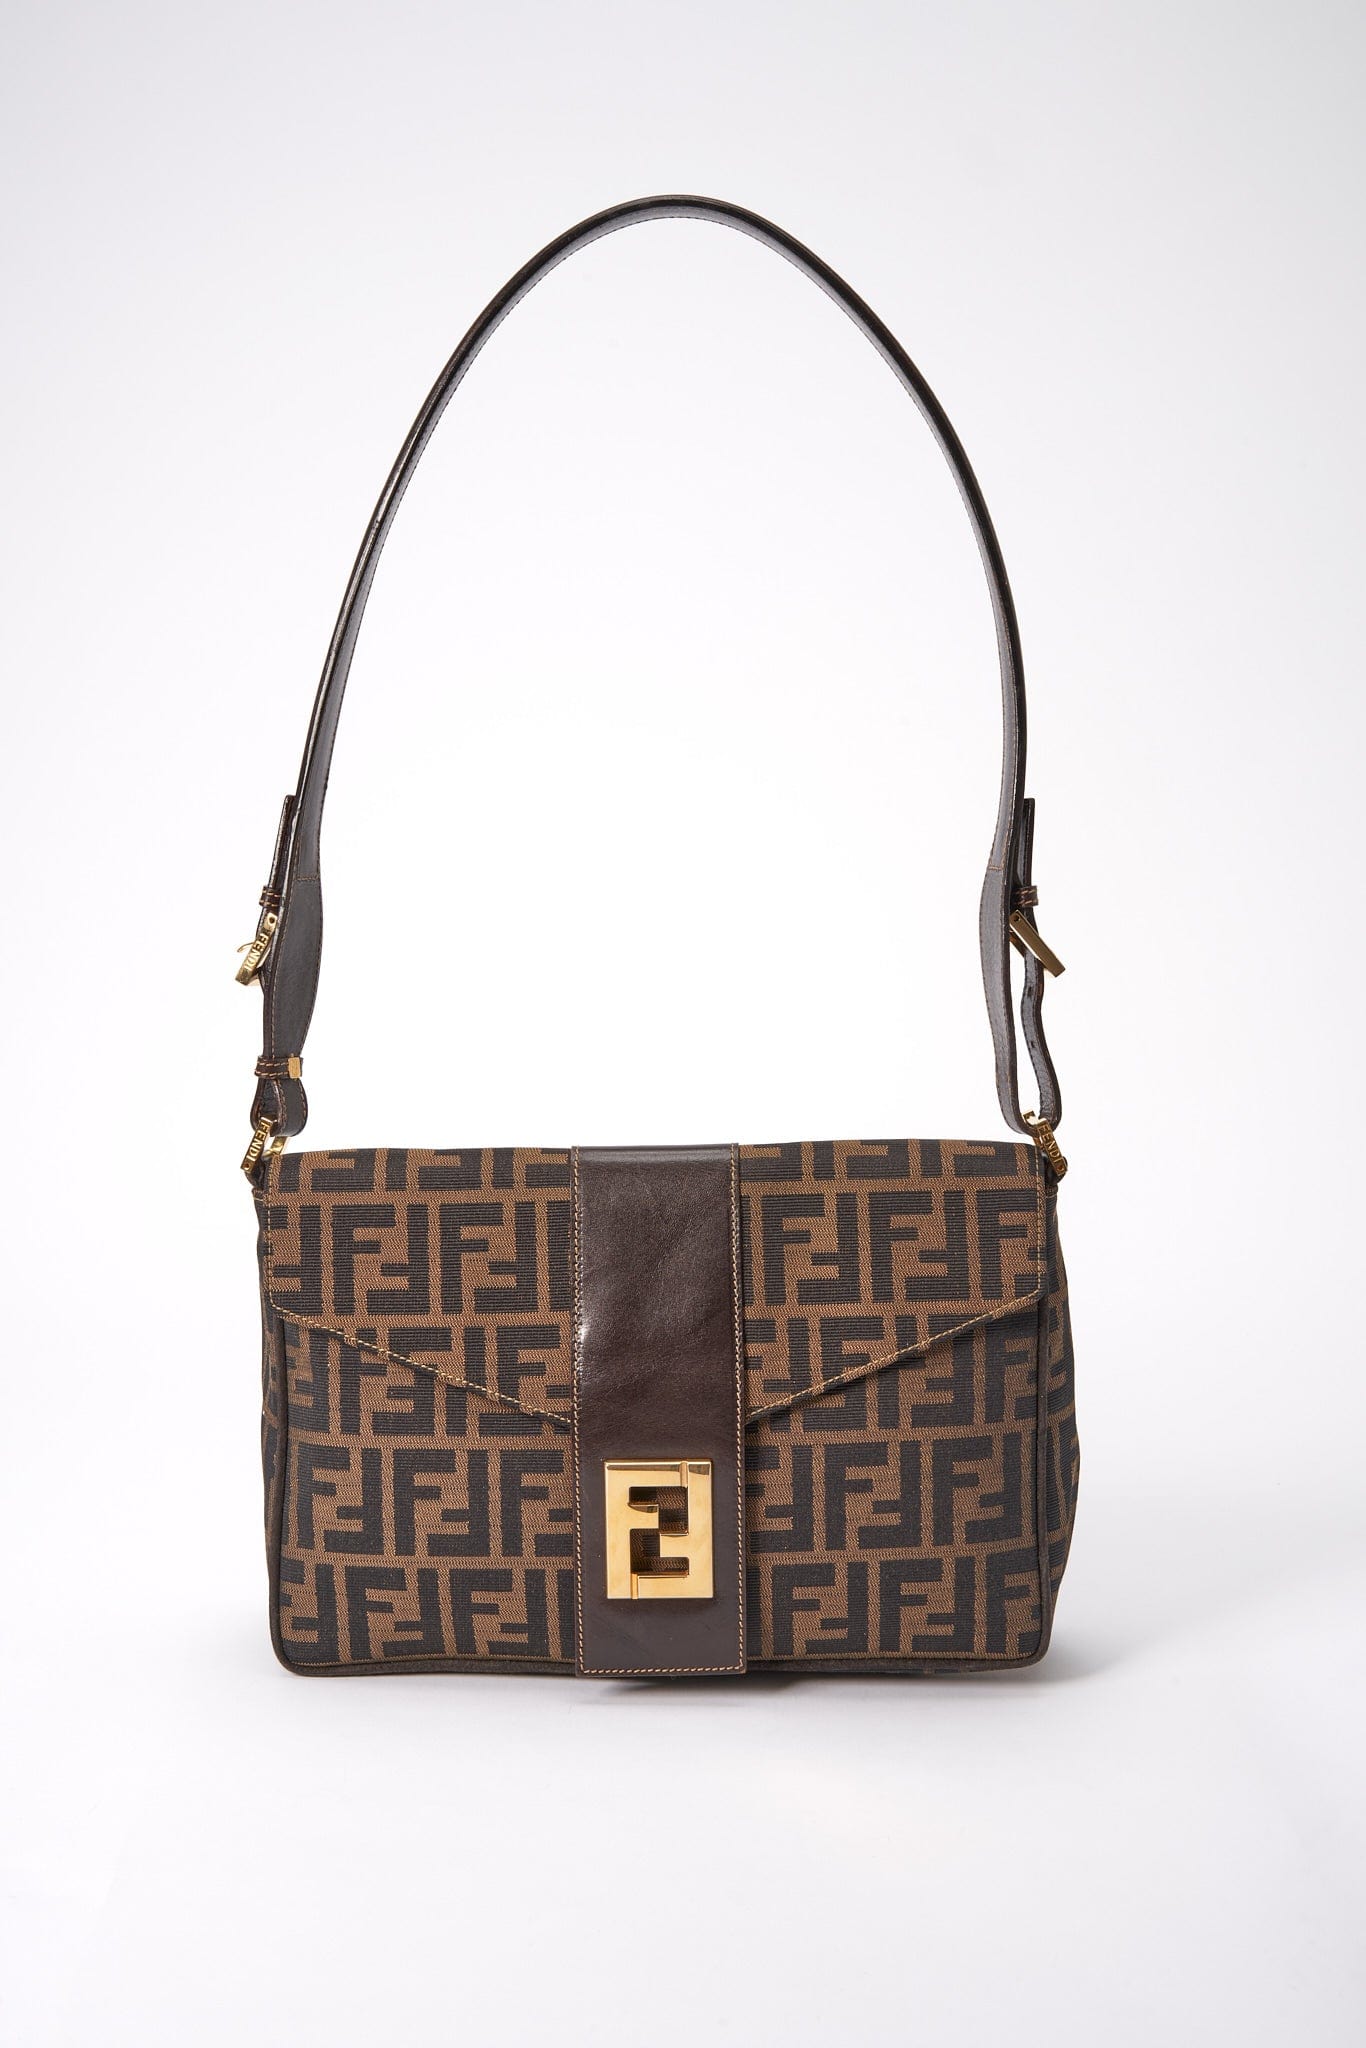 Fendi Small Ff Logo Shoulder Bag in Brown